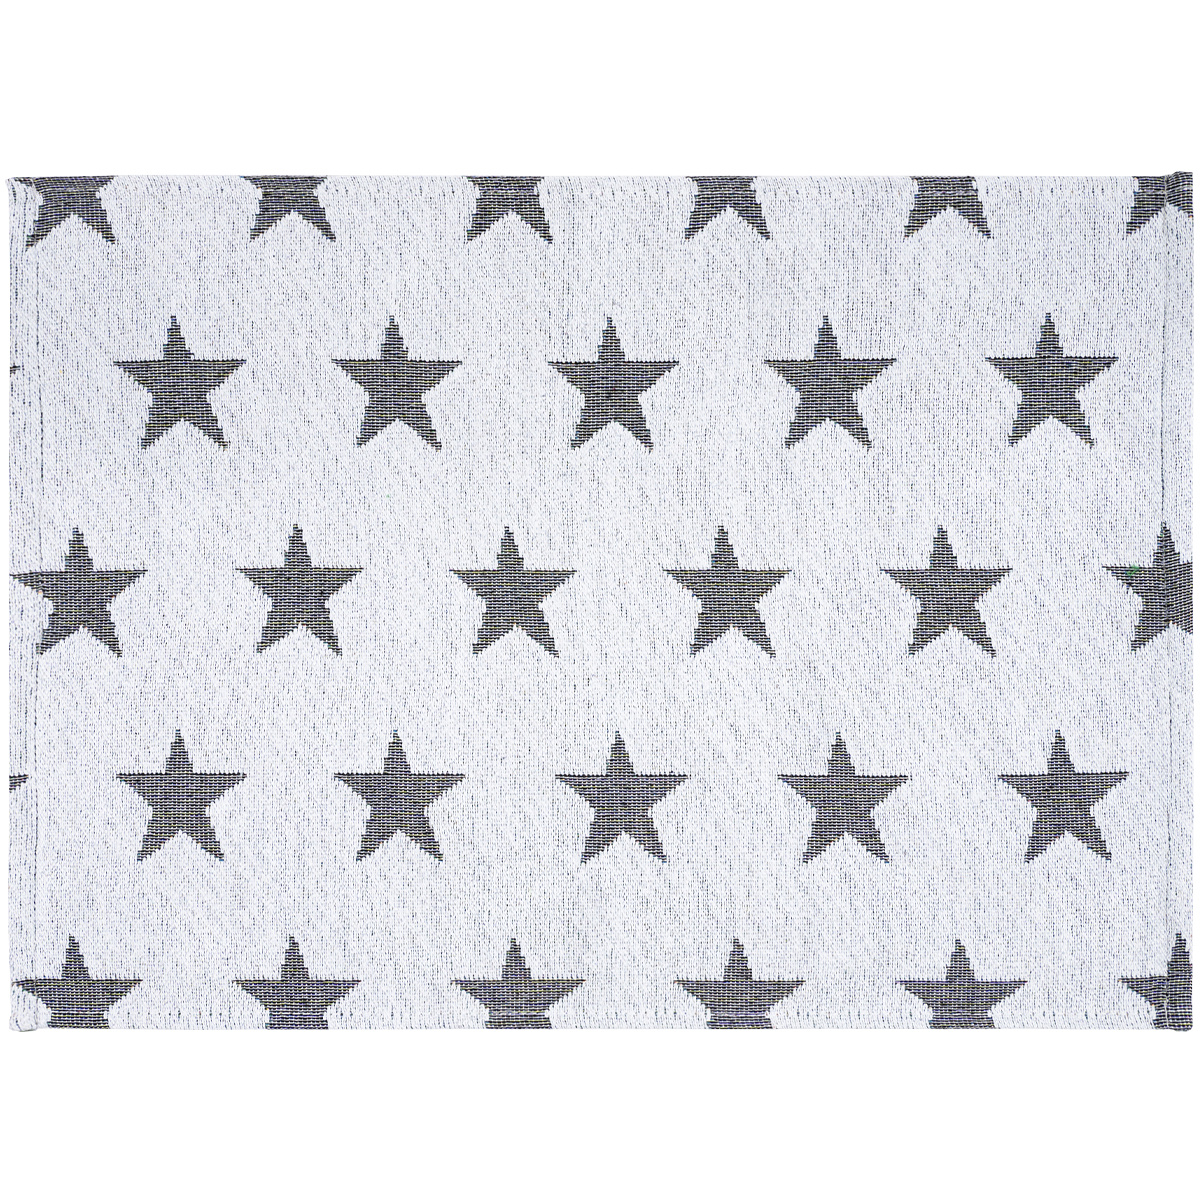 Dakls Stars white alátét, 30 x 45 cm